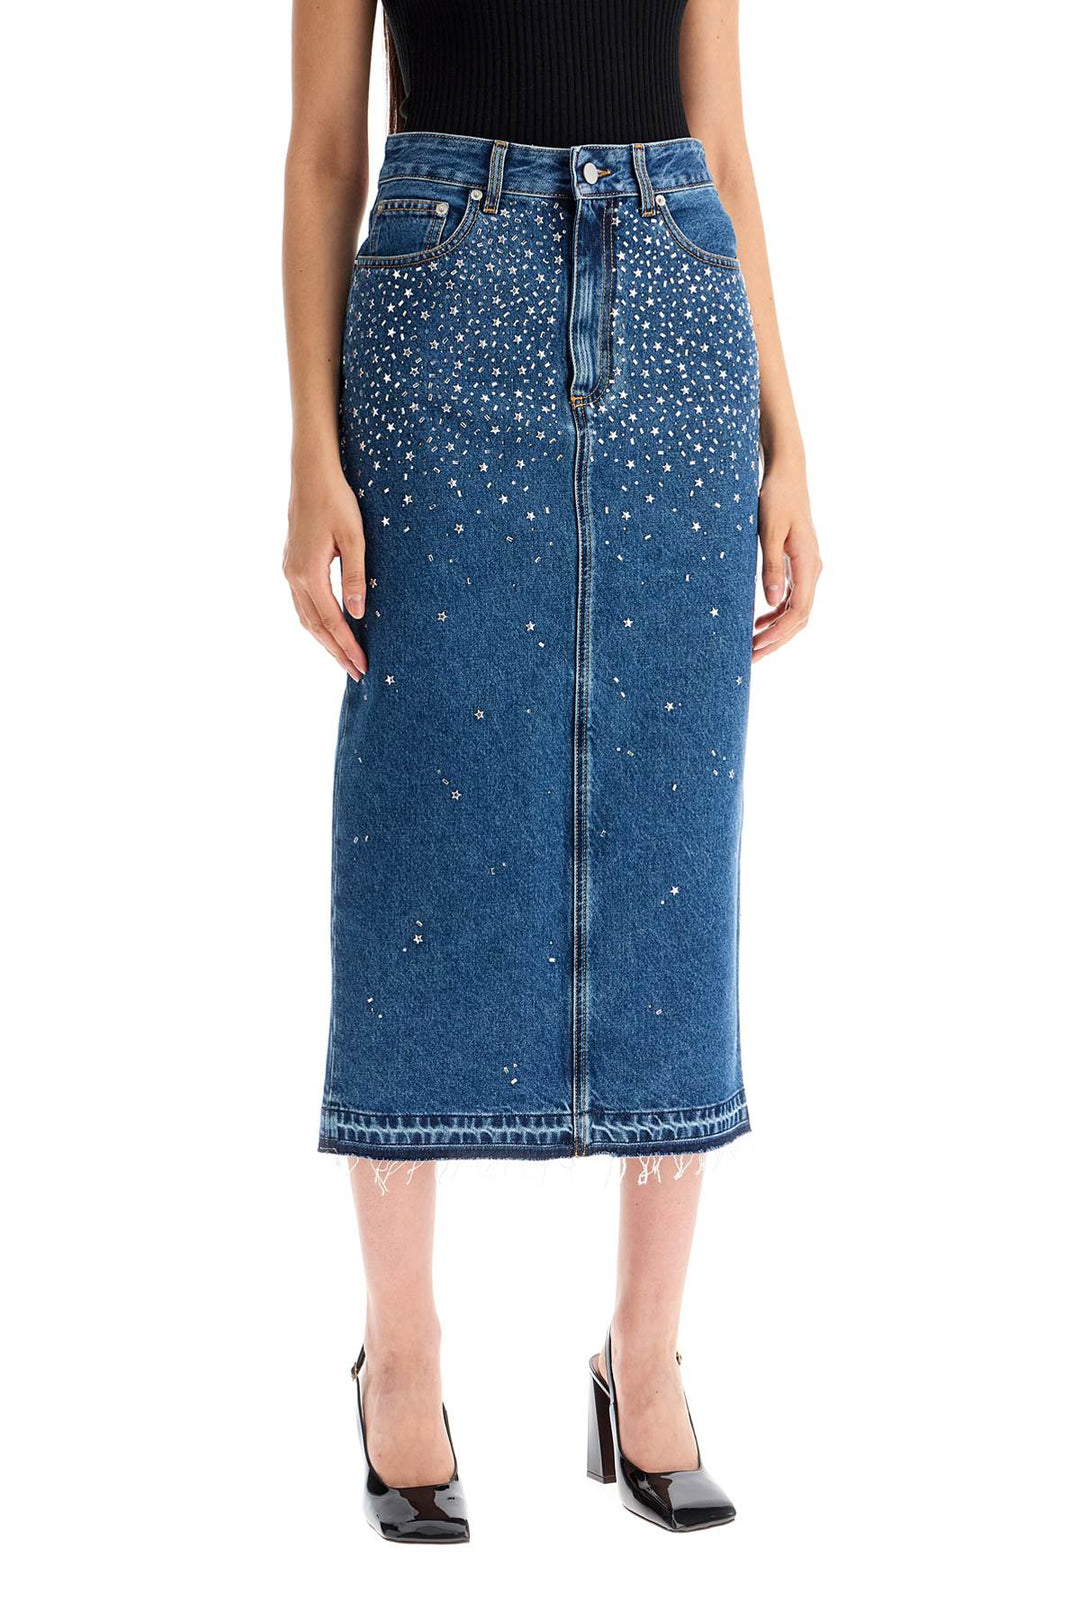 Alessandra Rich denim Midi Skirt With Rhinestones  Blue